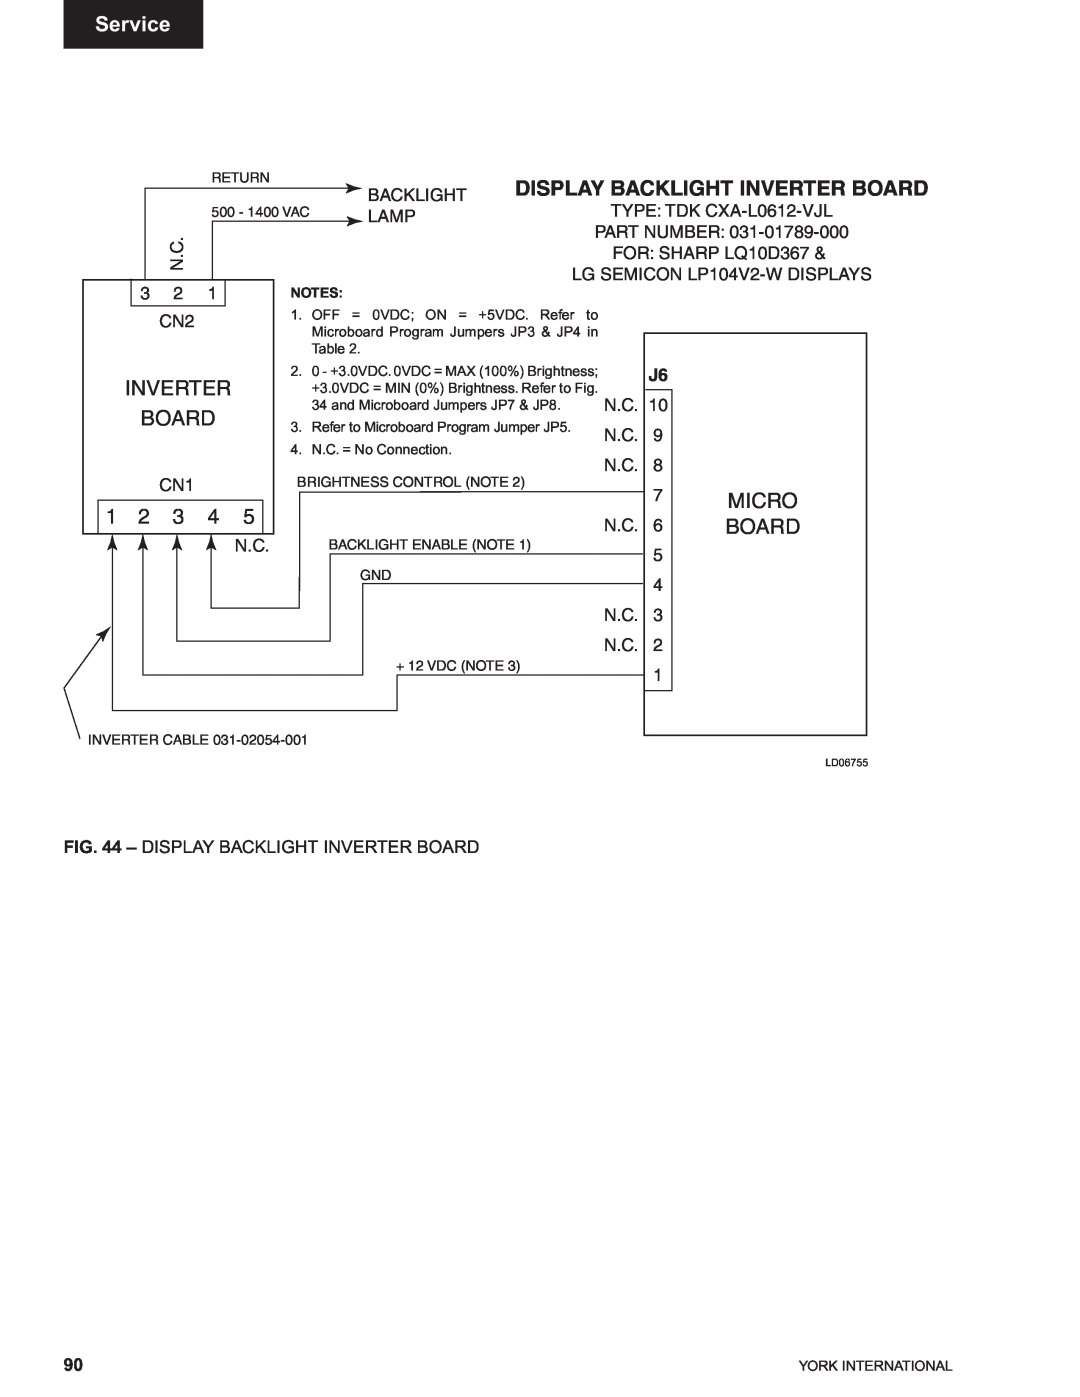 York 00497VIP manual Micro, Service, Display Backlight Inverter Board 